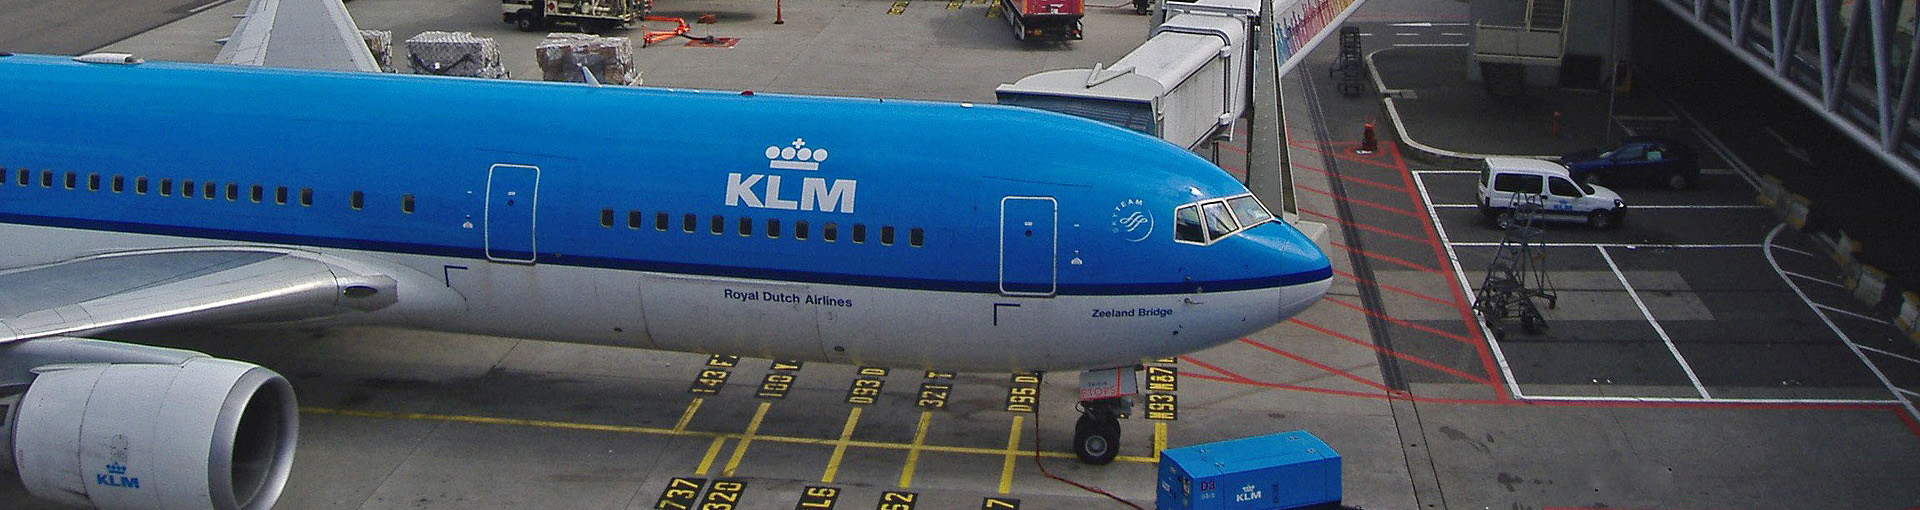 Avion-amsterdam